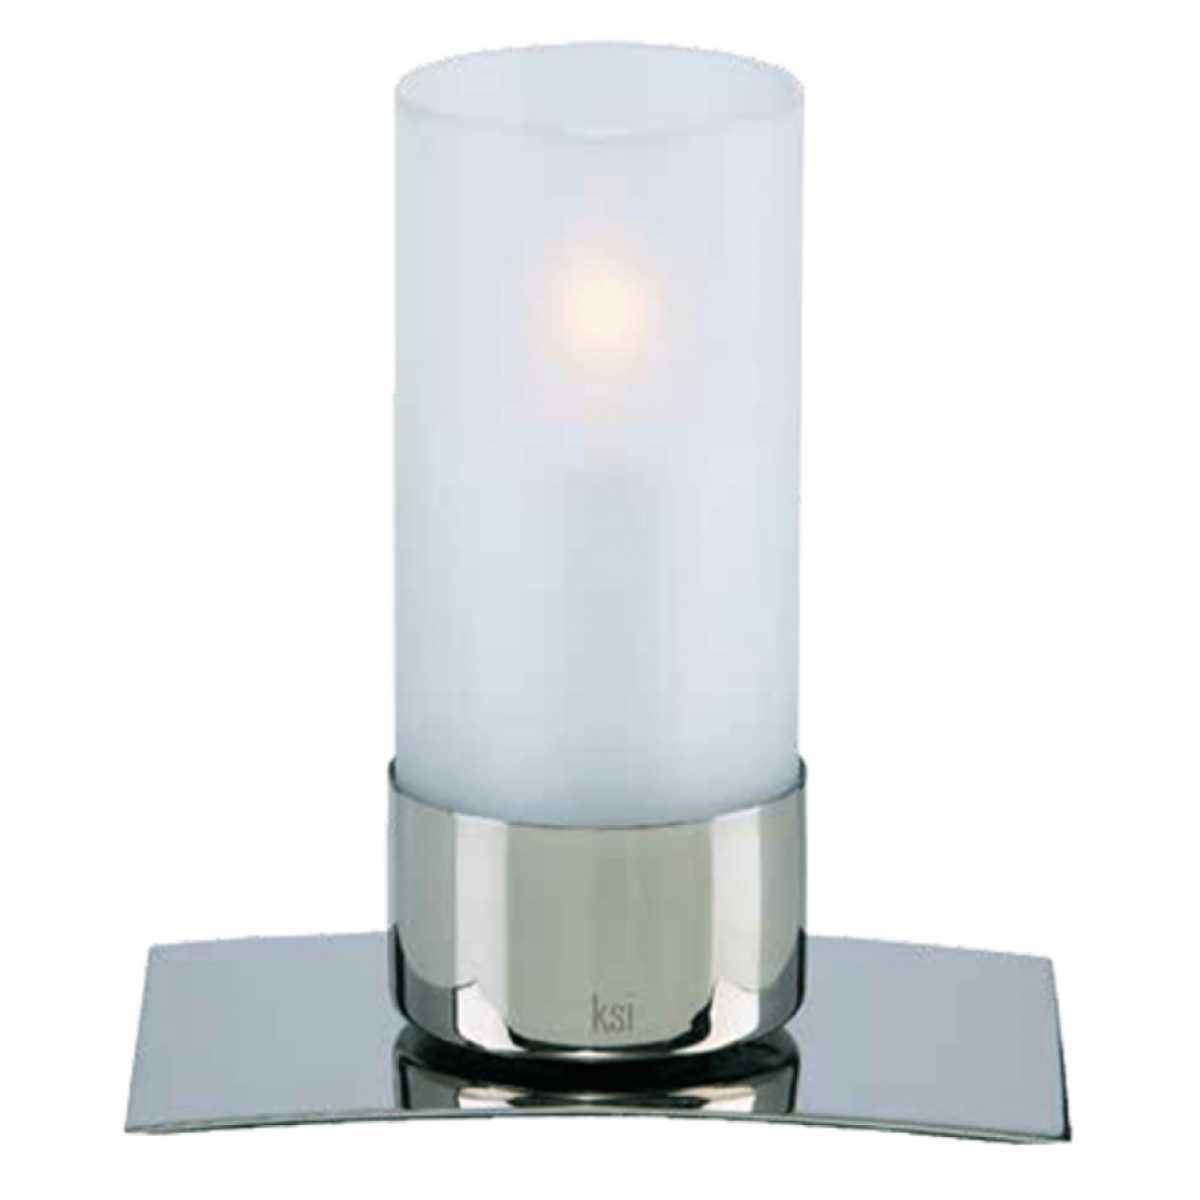 KSI Leggera 2 Table Lamp